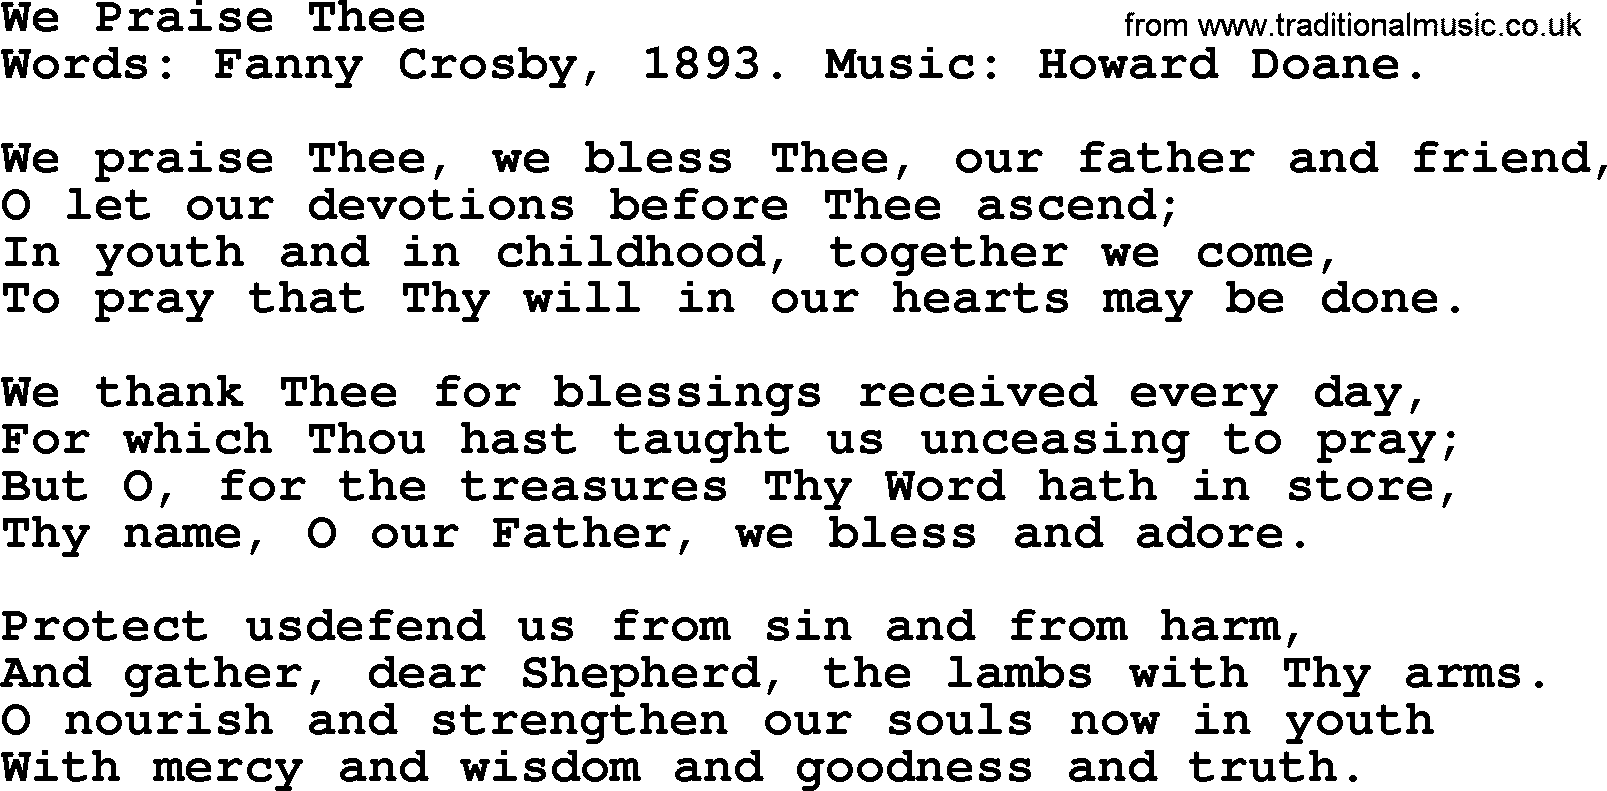 Fanny Crosby song: We Praise Thee, lyrics